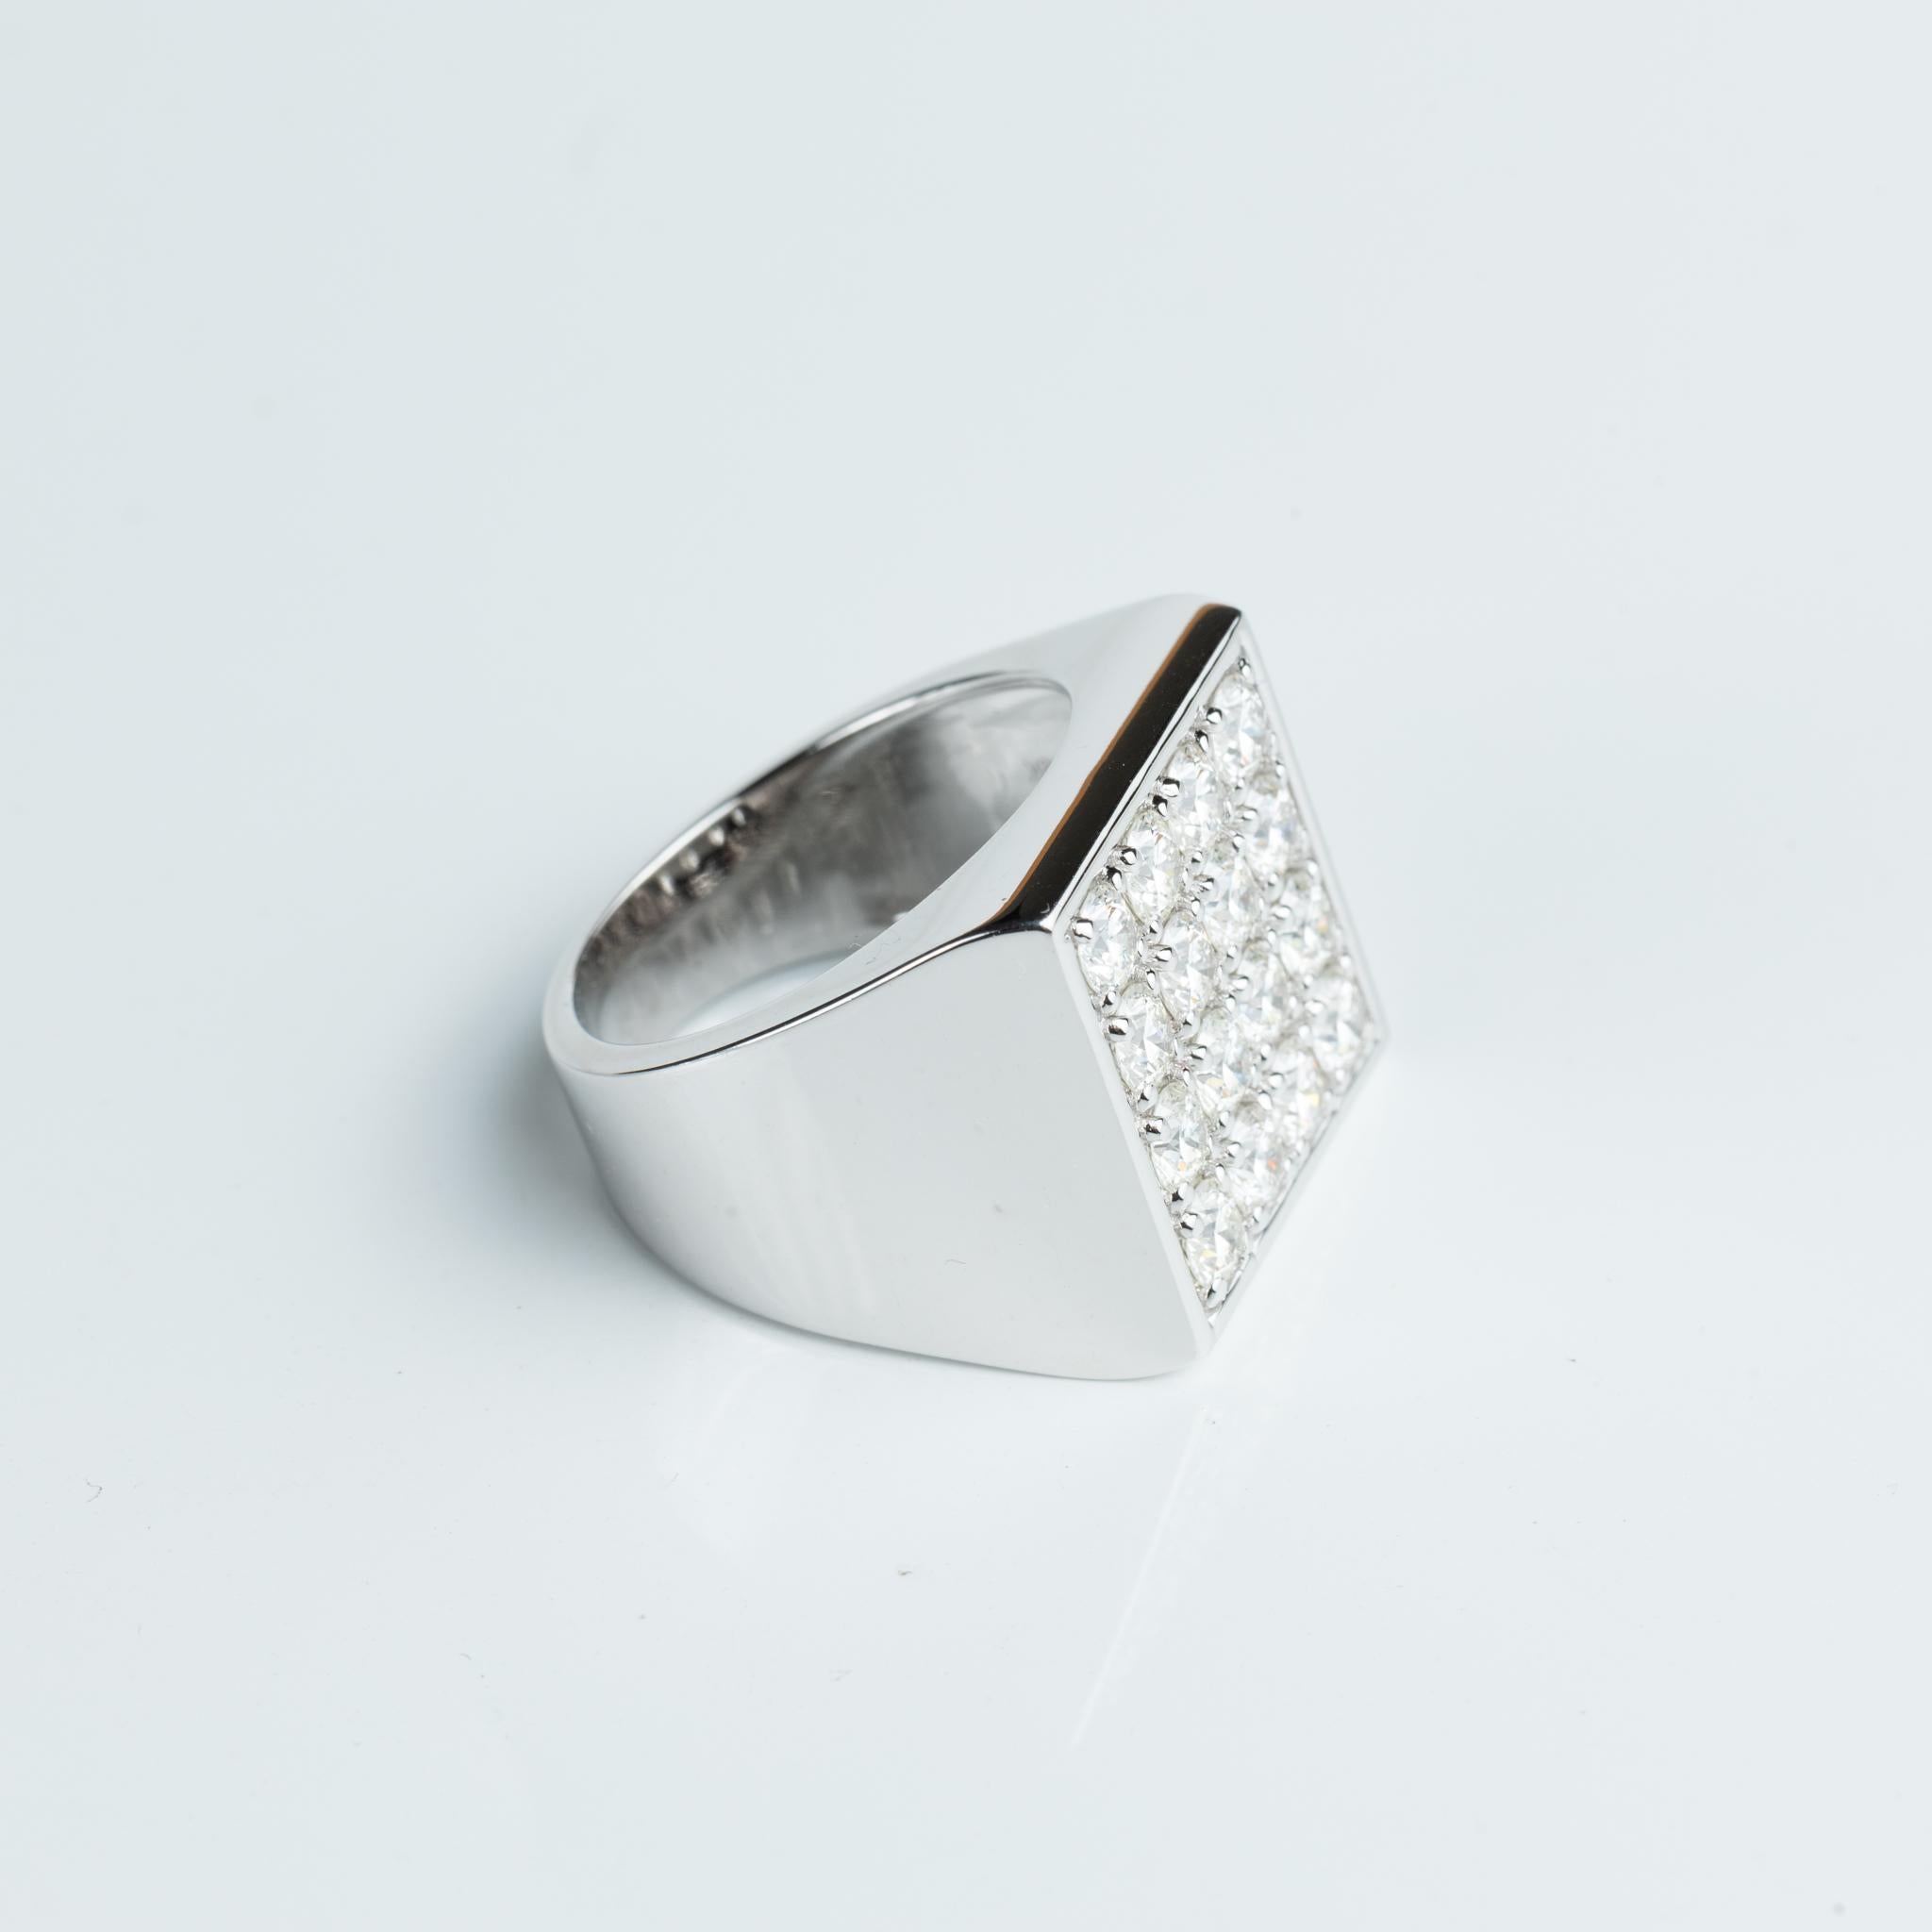 Asscher Cut 2.57 Total Carat Weight Round Cut Diamond in 18k White Gold Signet Ring  For Sale